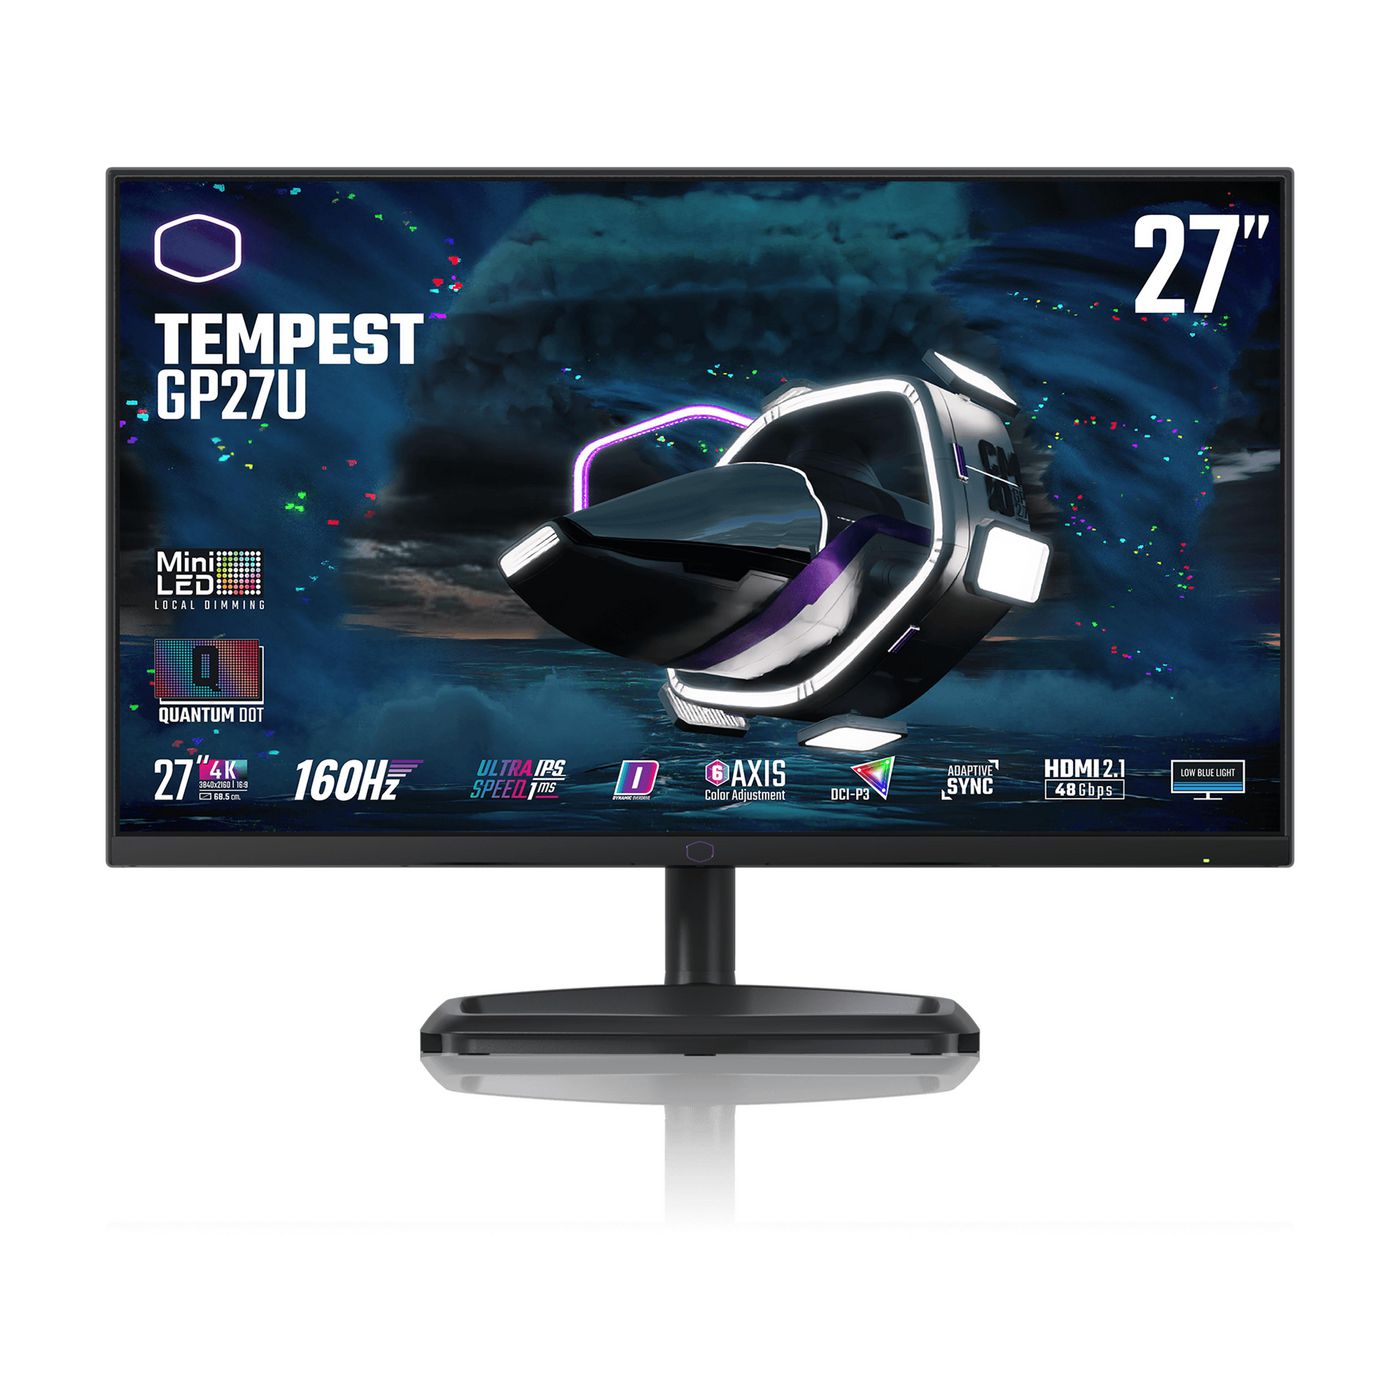 Cooler-Master CMI-GP27-FUS-EK W128561669 Gaming Tempest Gp27U Led 